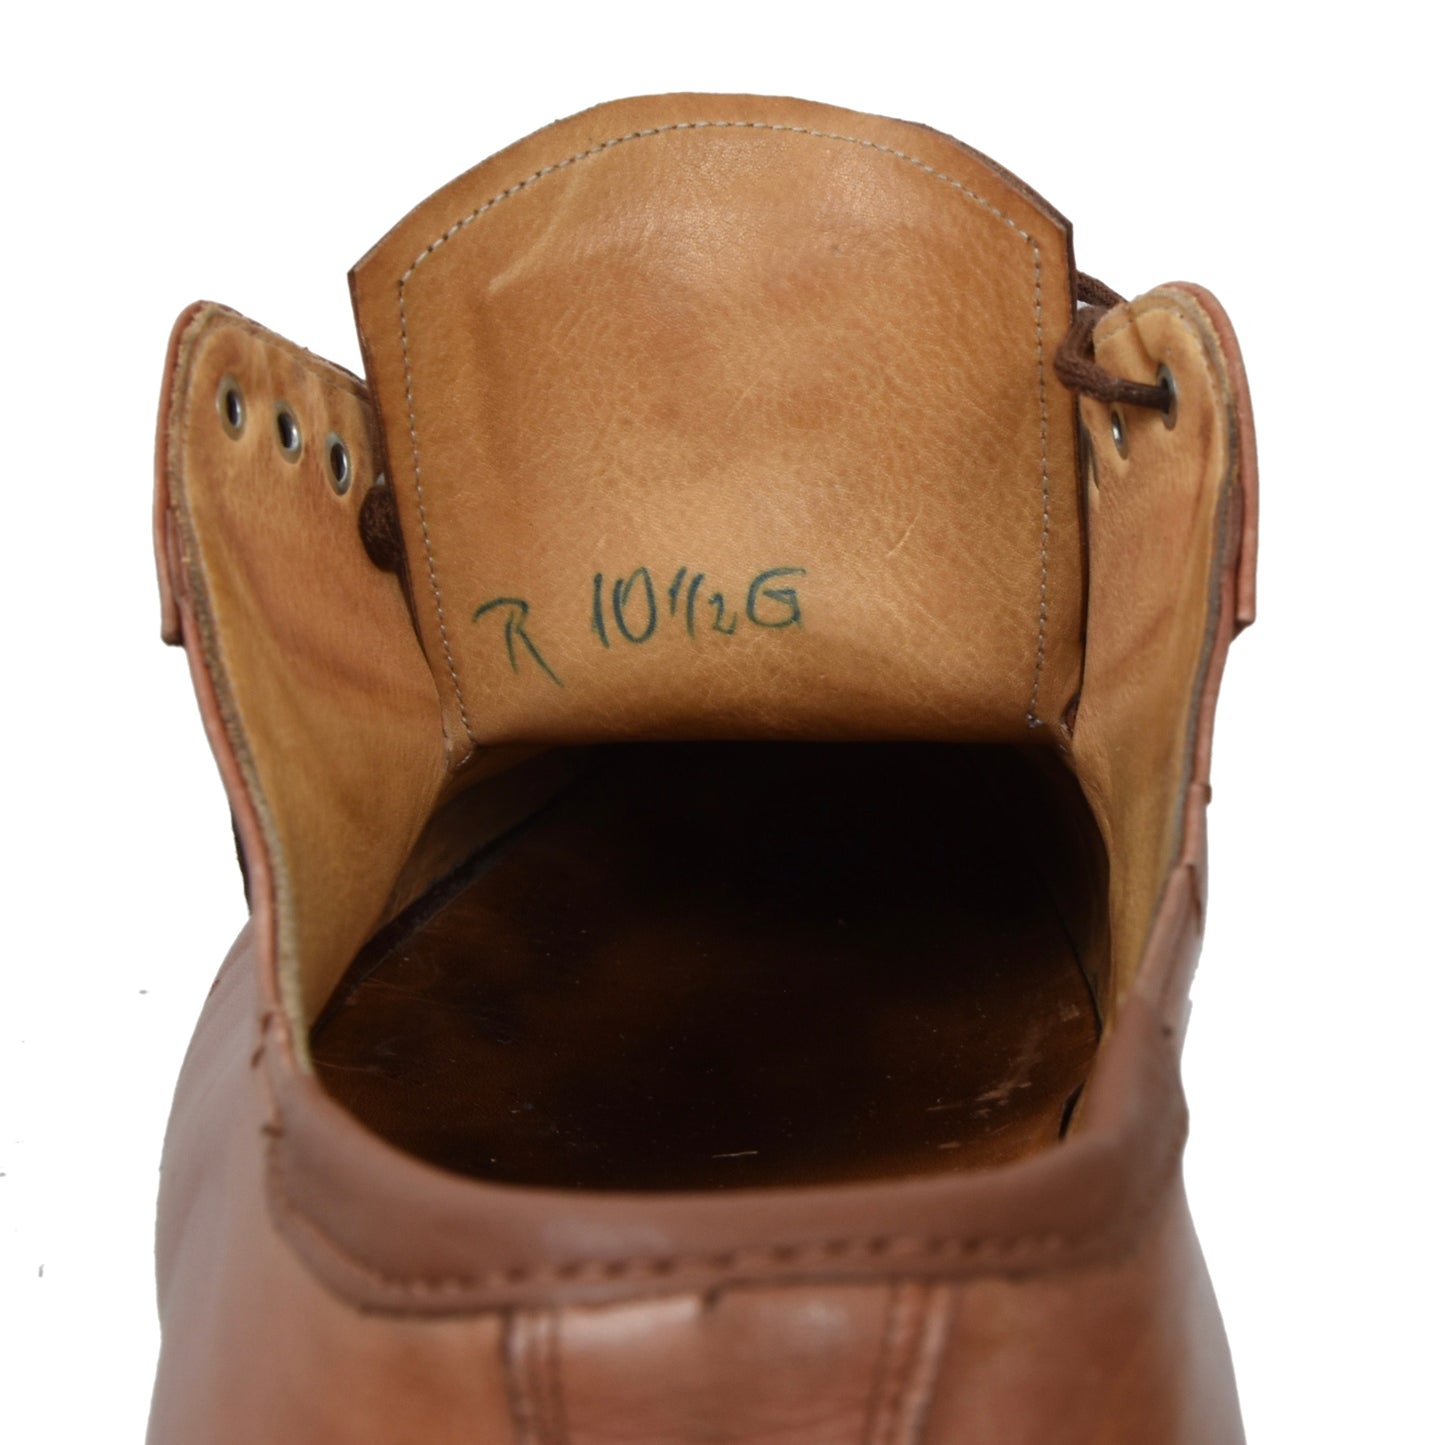 Semlitsch Handmade Norweger Split Toe Shoes Size 10.5G - Tan